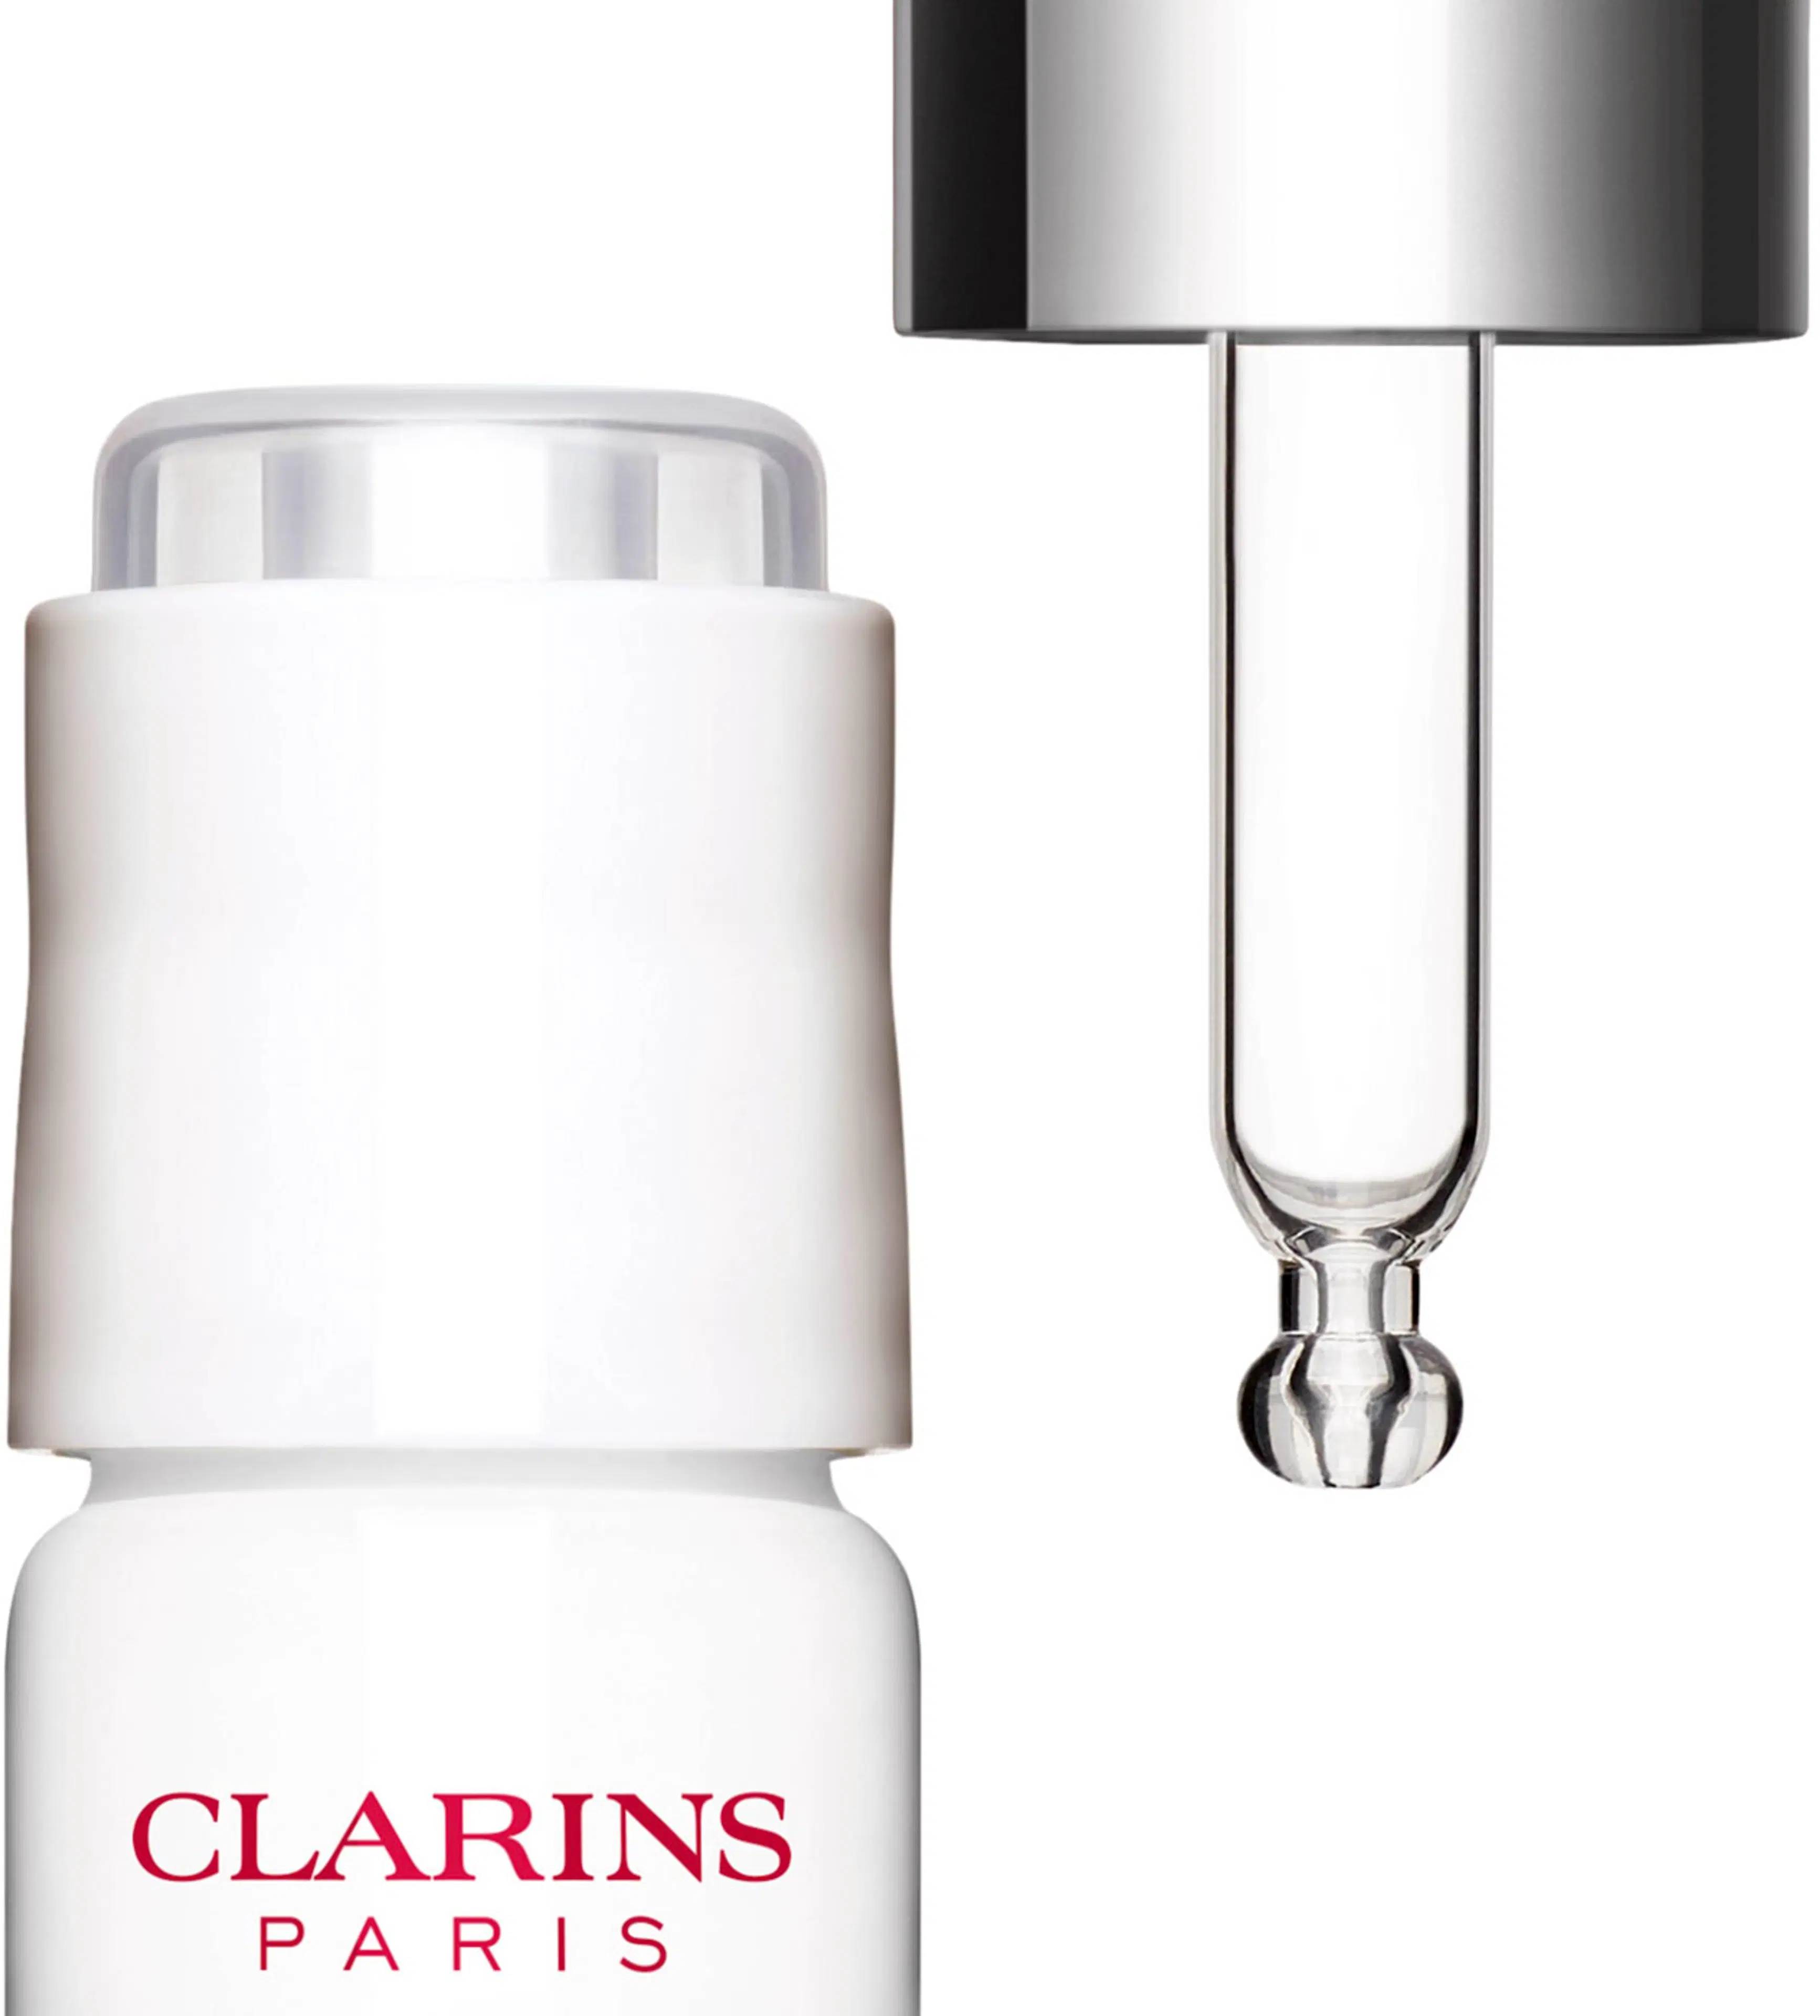 Clarins Beauty Flash Fresh Ampoule hoitotiiviste 8 ml